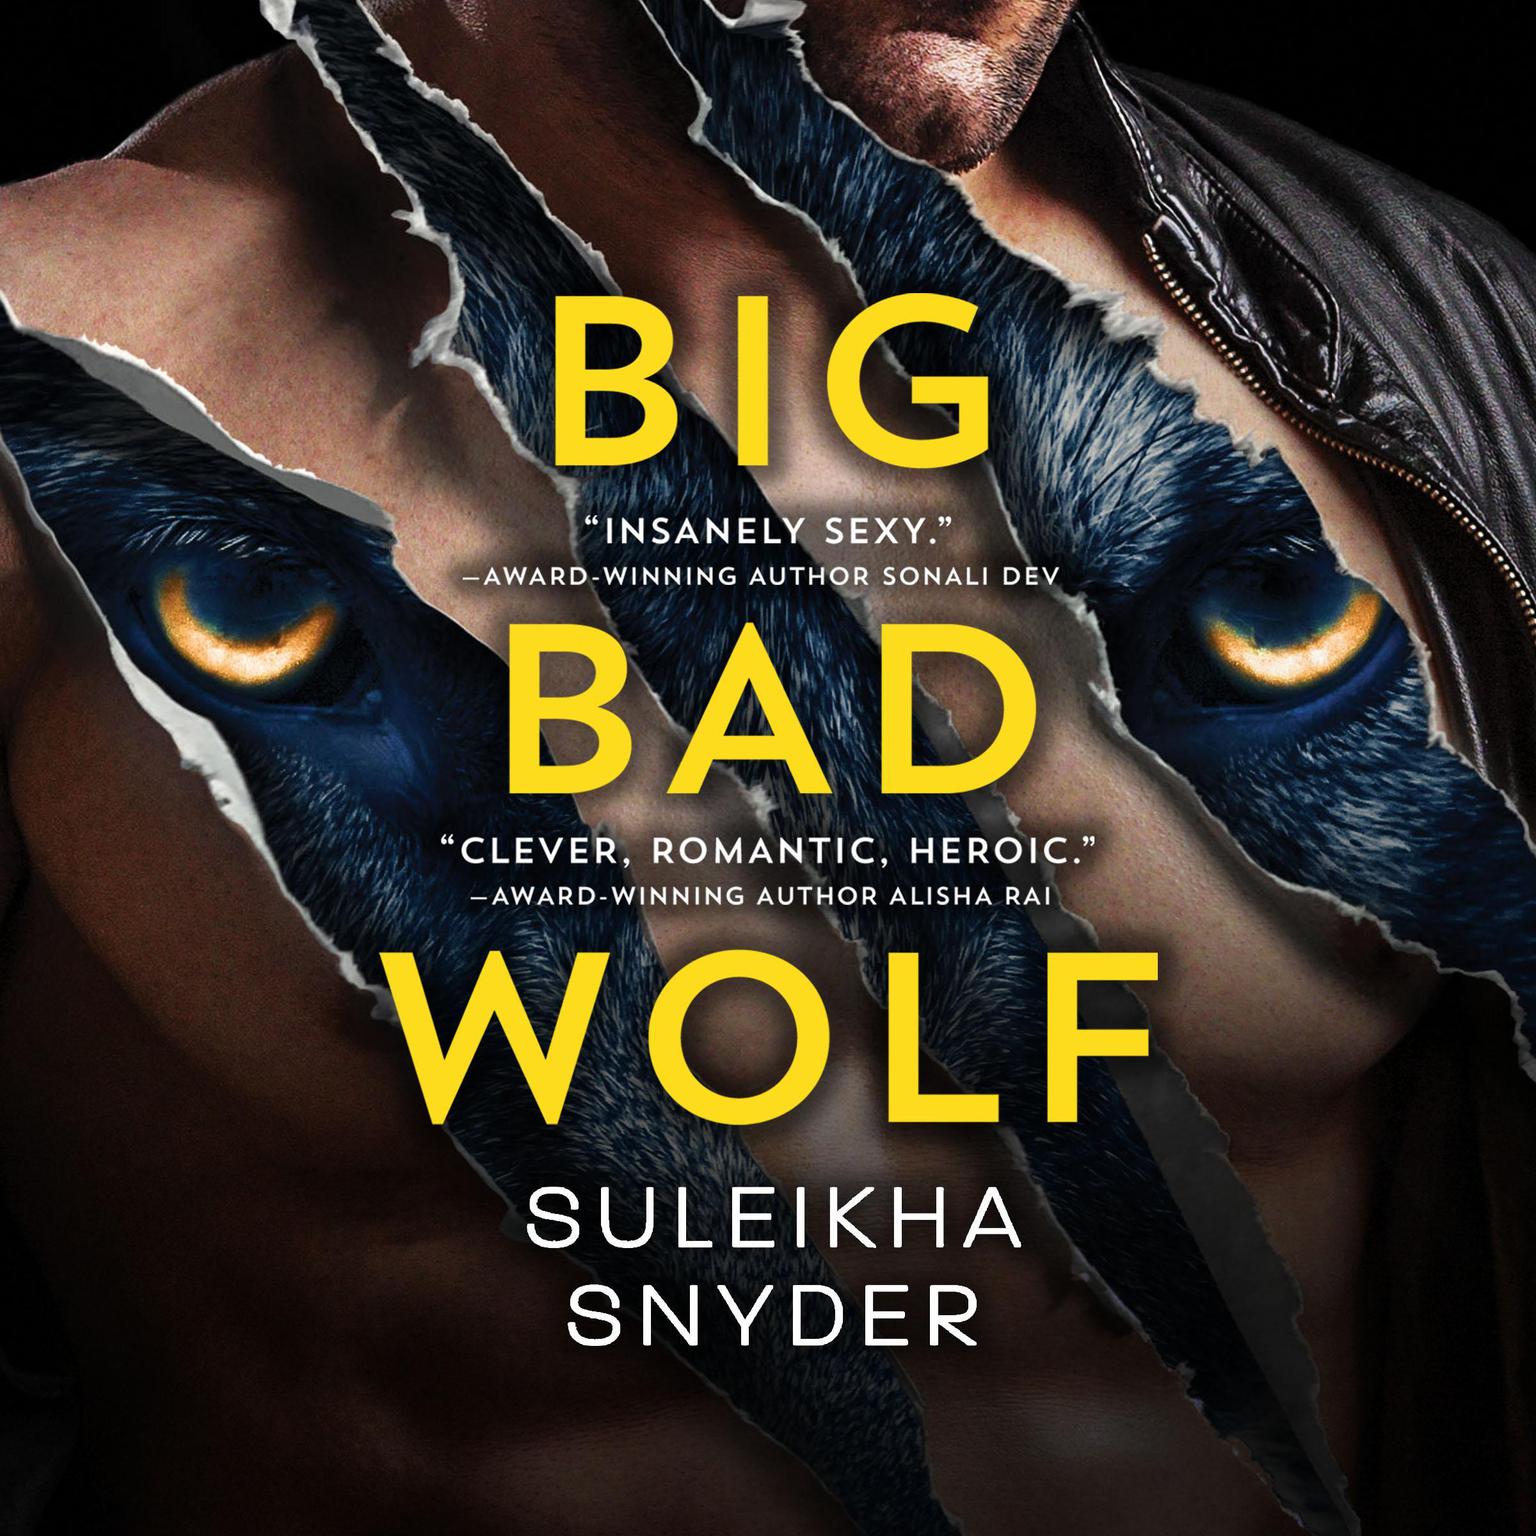 Big Bad Wolf Audiobook, by Suleikha Snyder